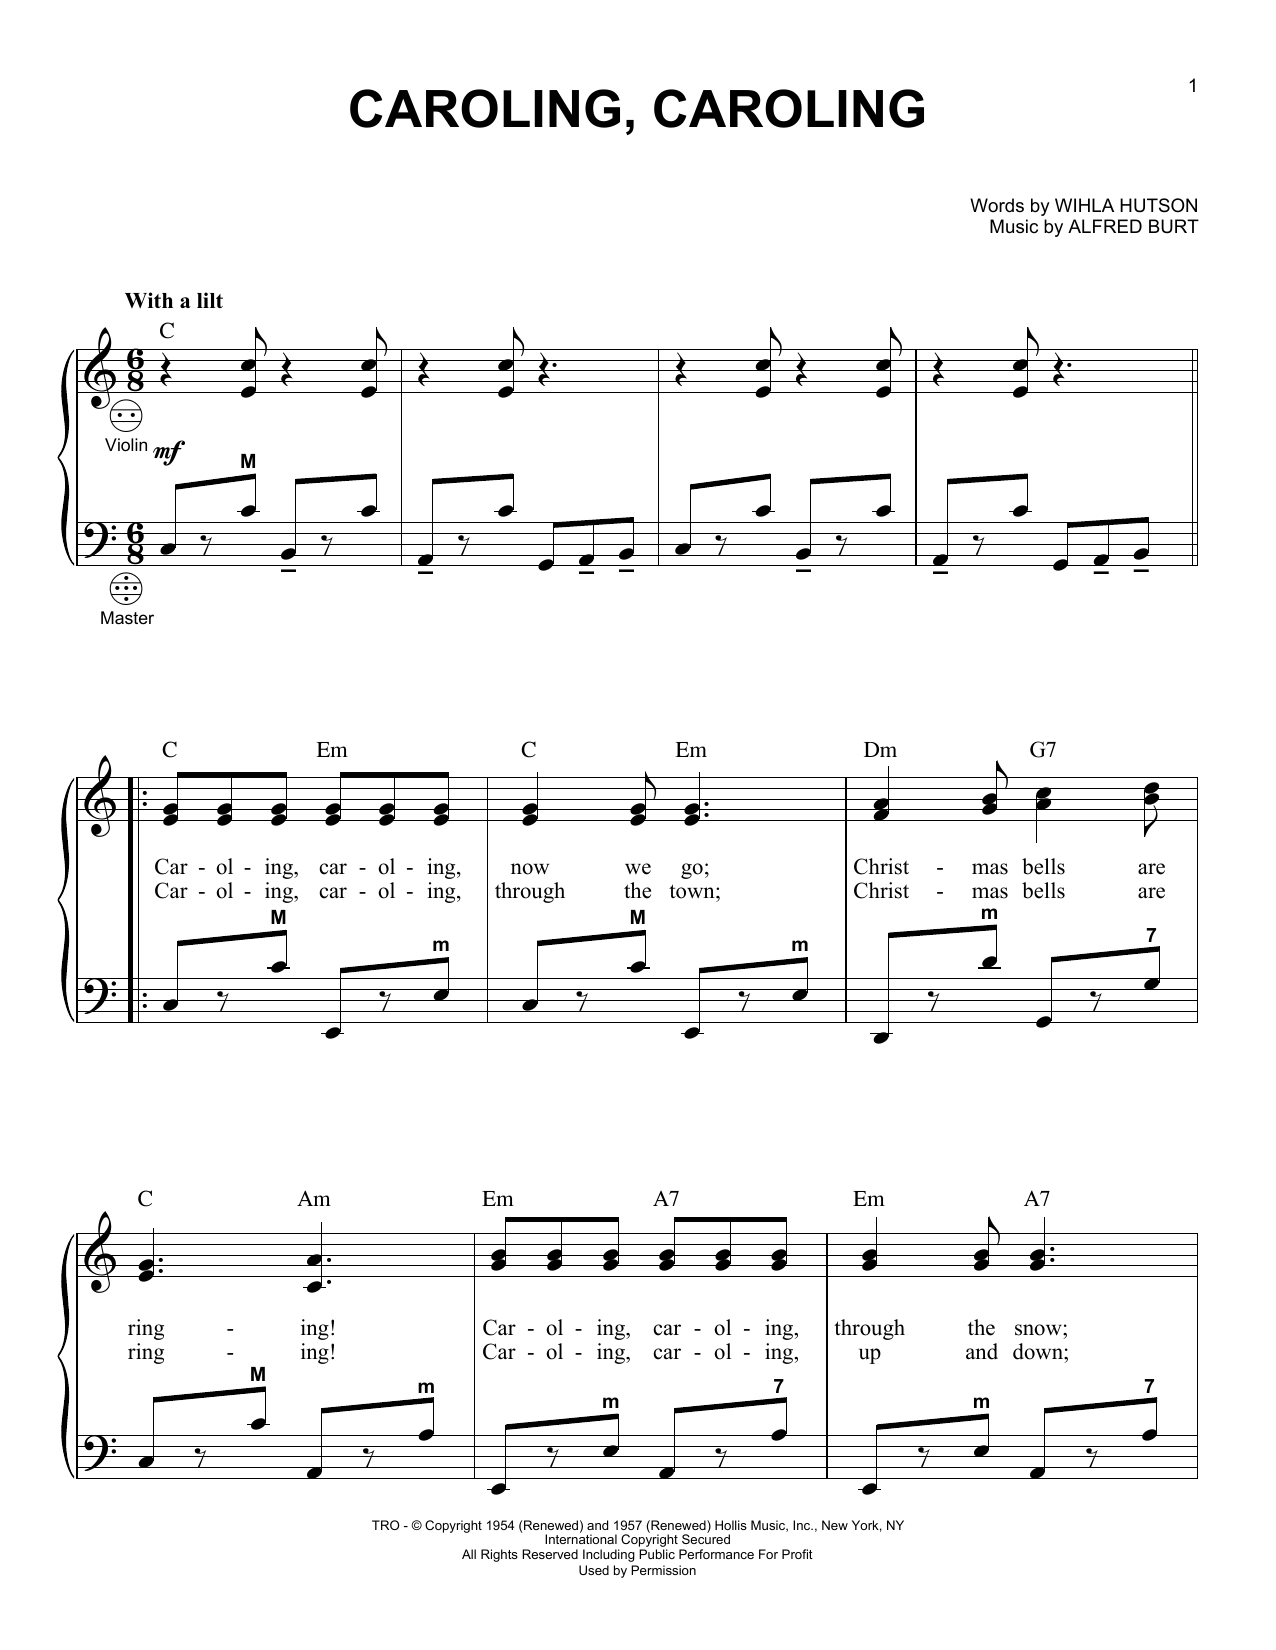 Download Alfred Burt Caroling, Caroling Sheet Music and learn how to play Viola PDF digital score in minutes